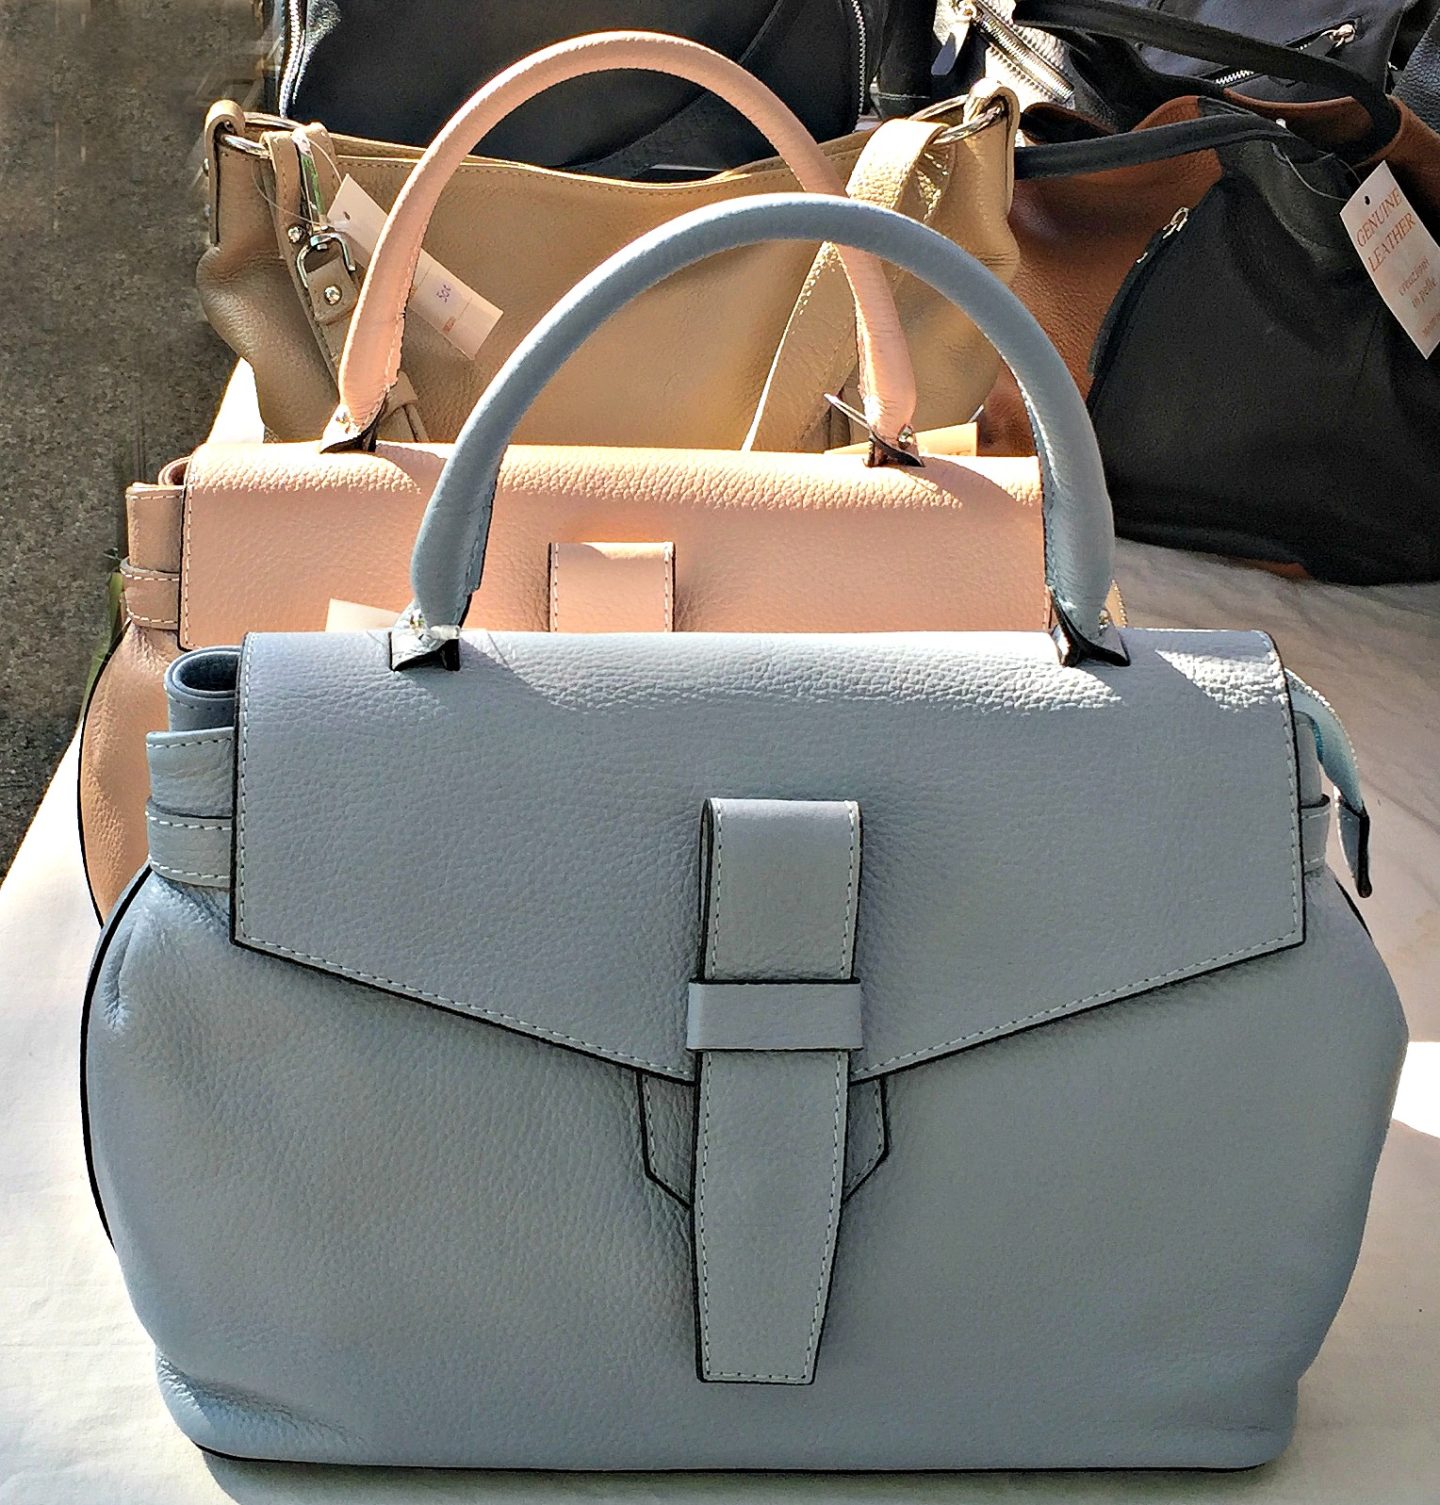 Pastel coloured handbags